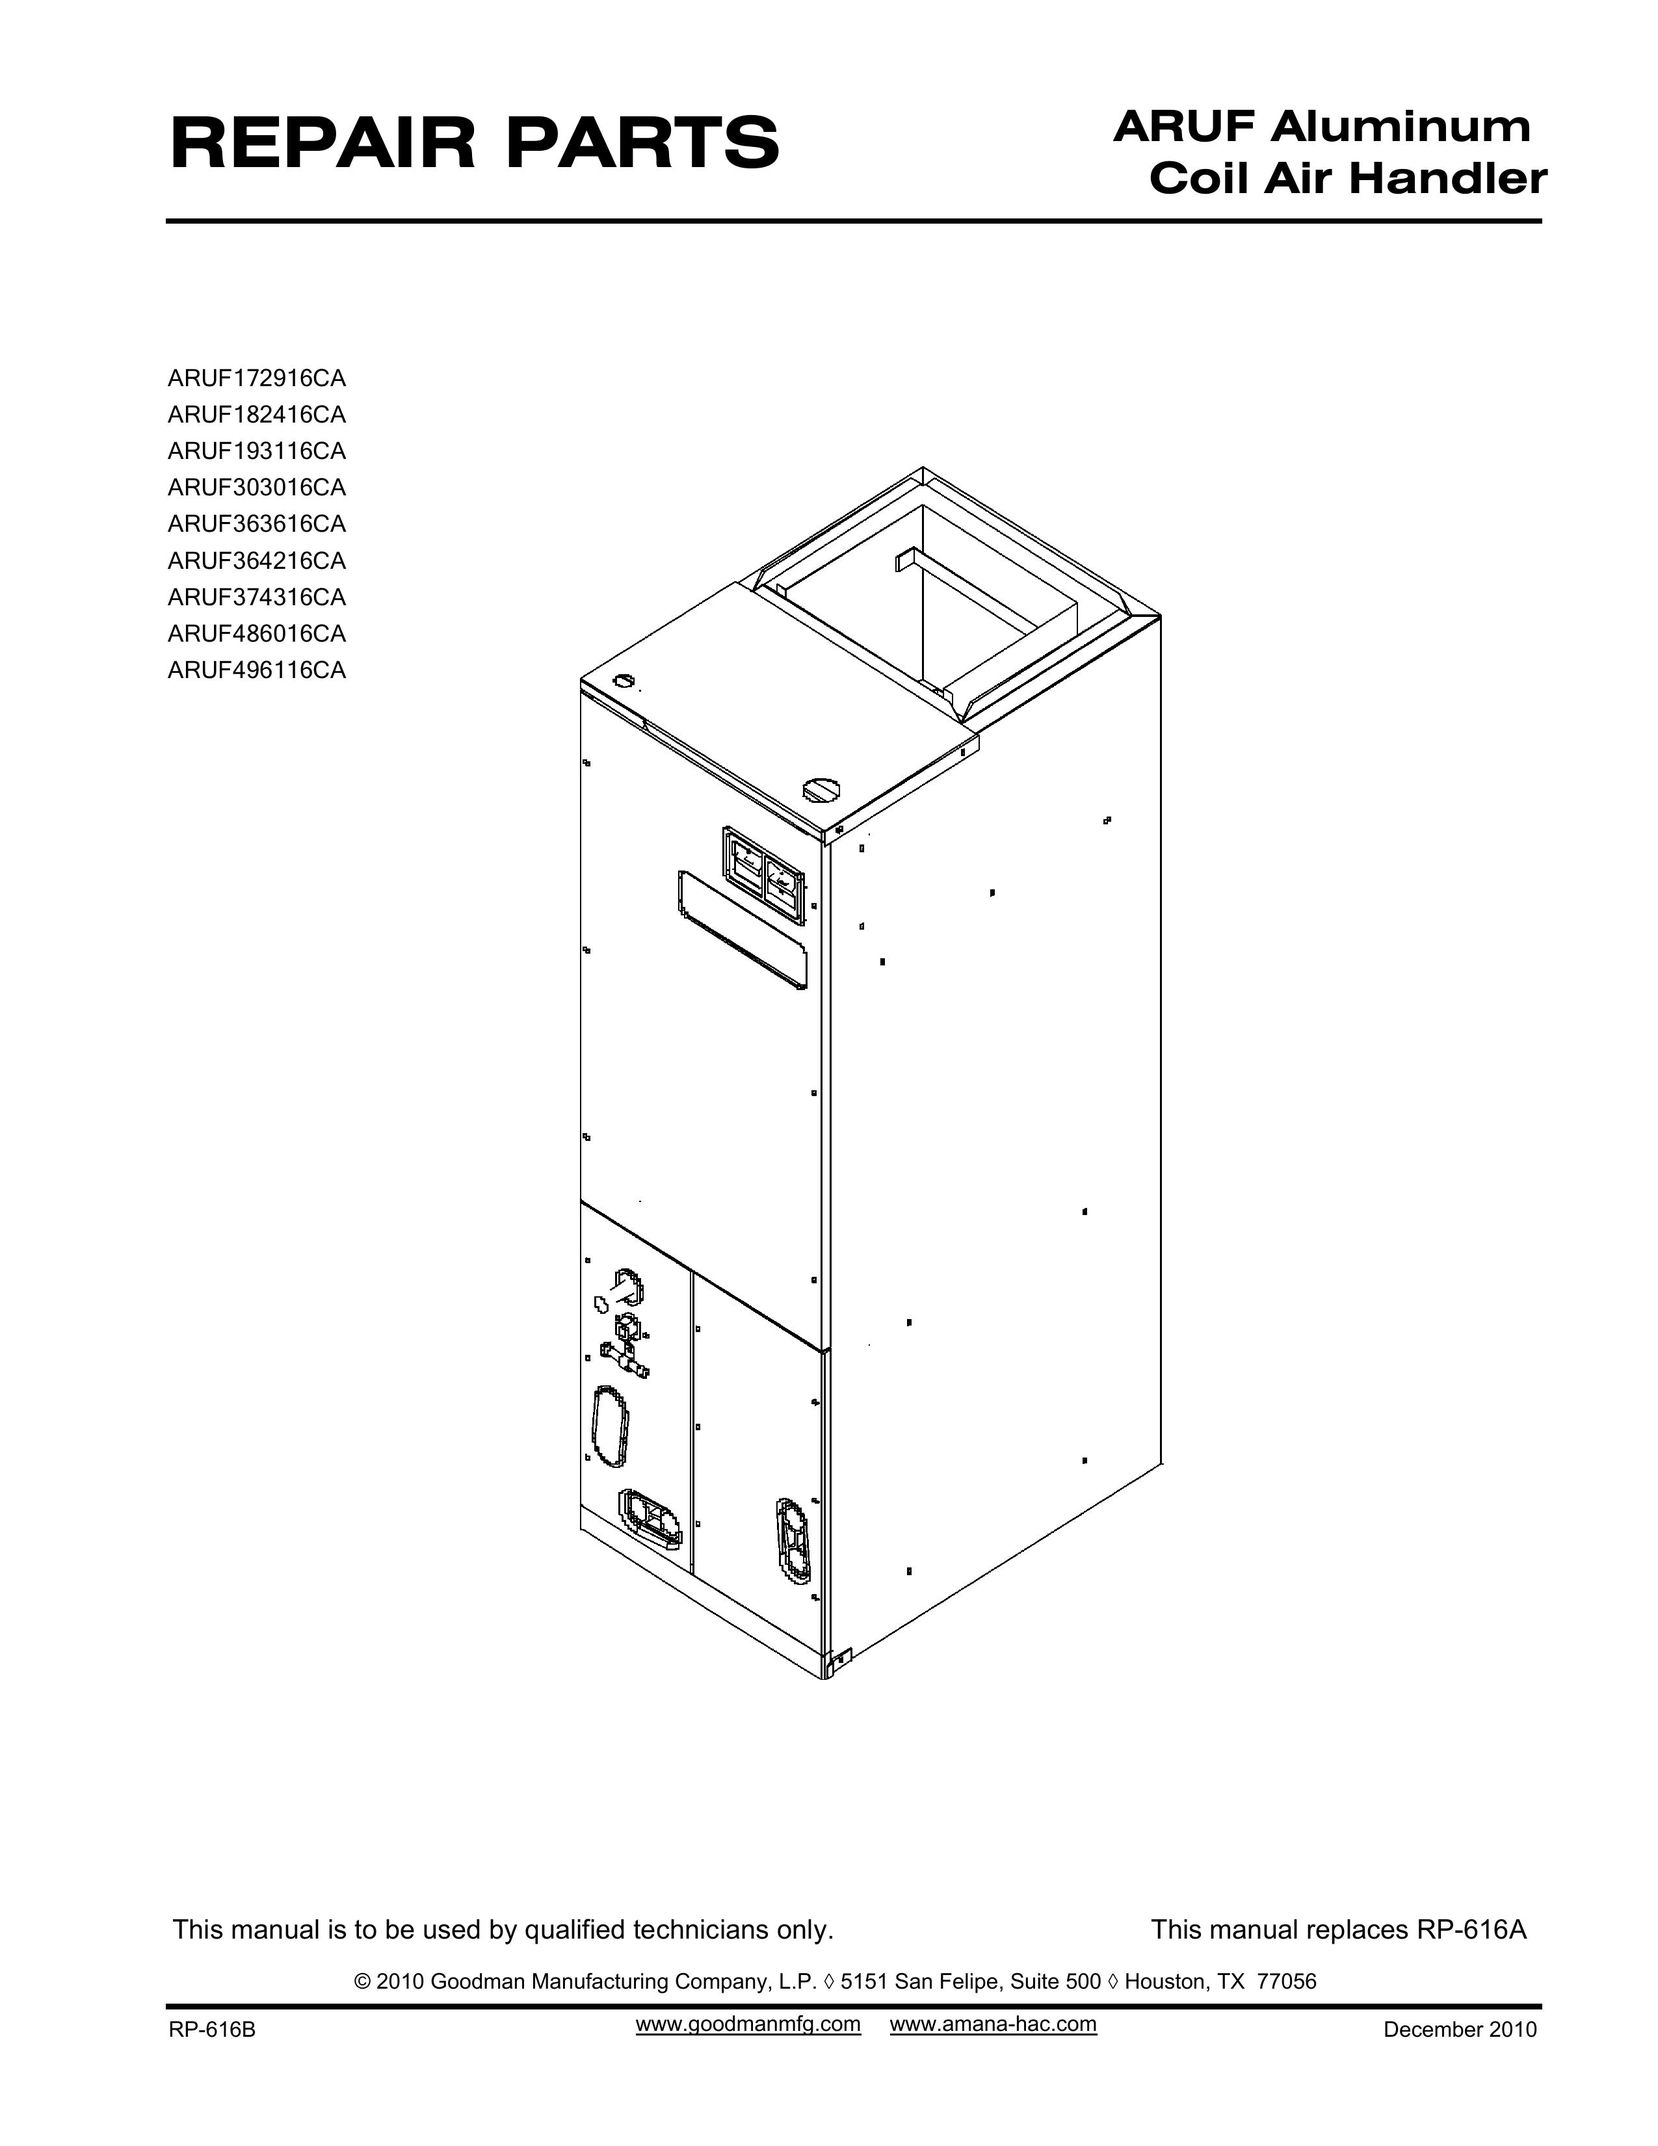 Goodman Mfg ARUF374316CA Air Conditioner User Manual